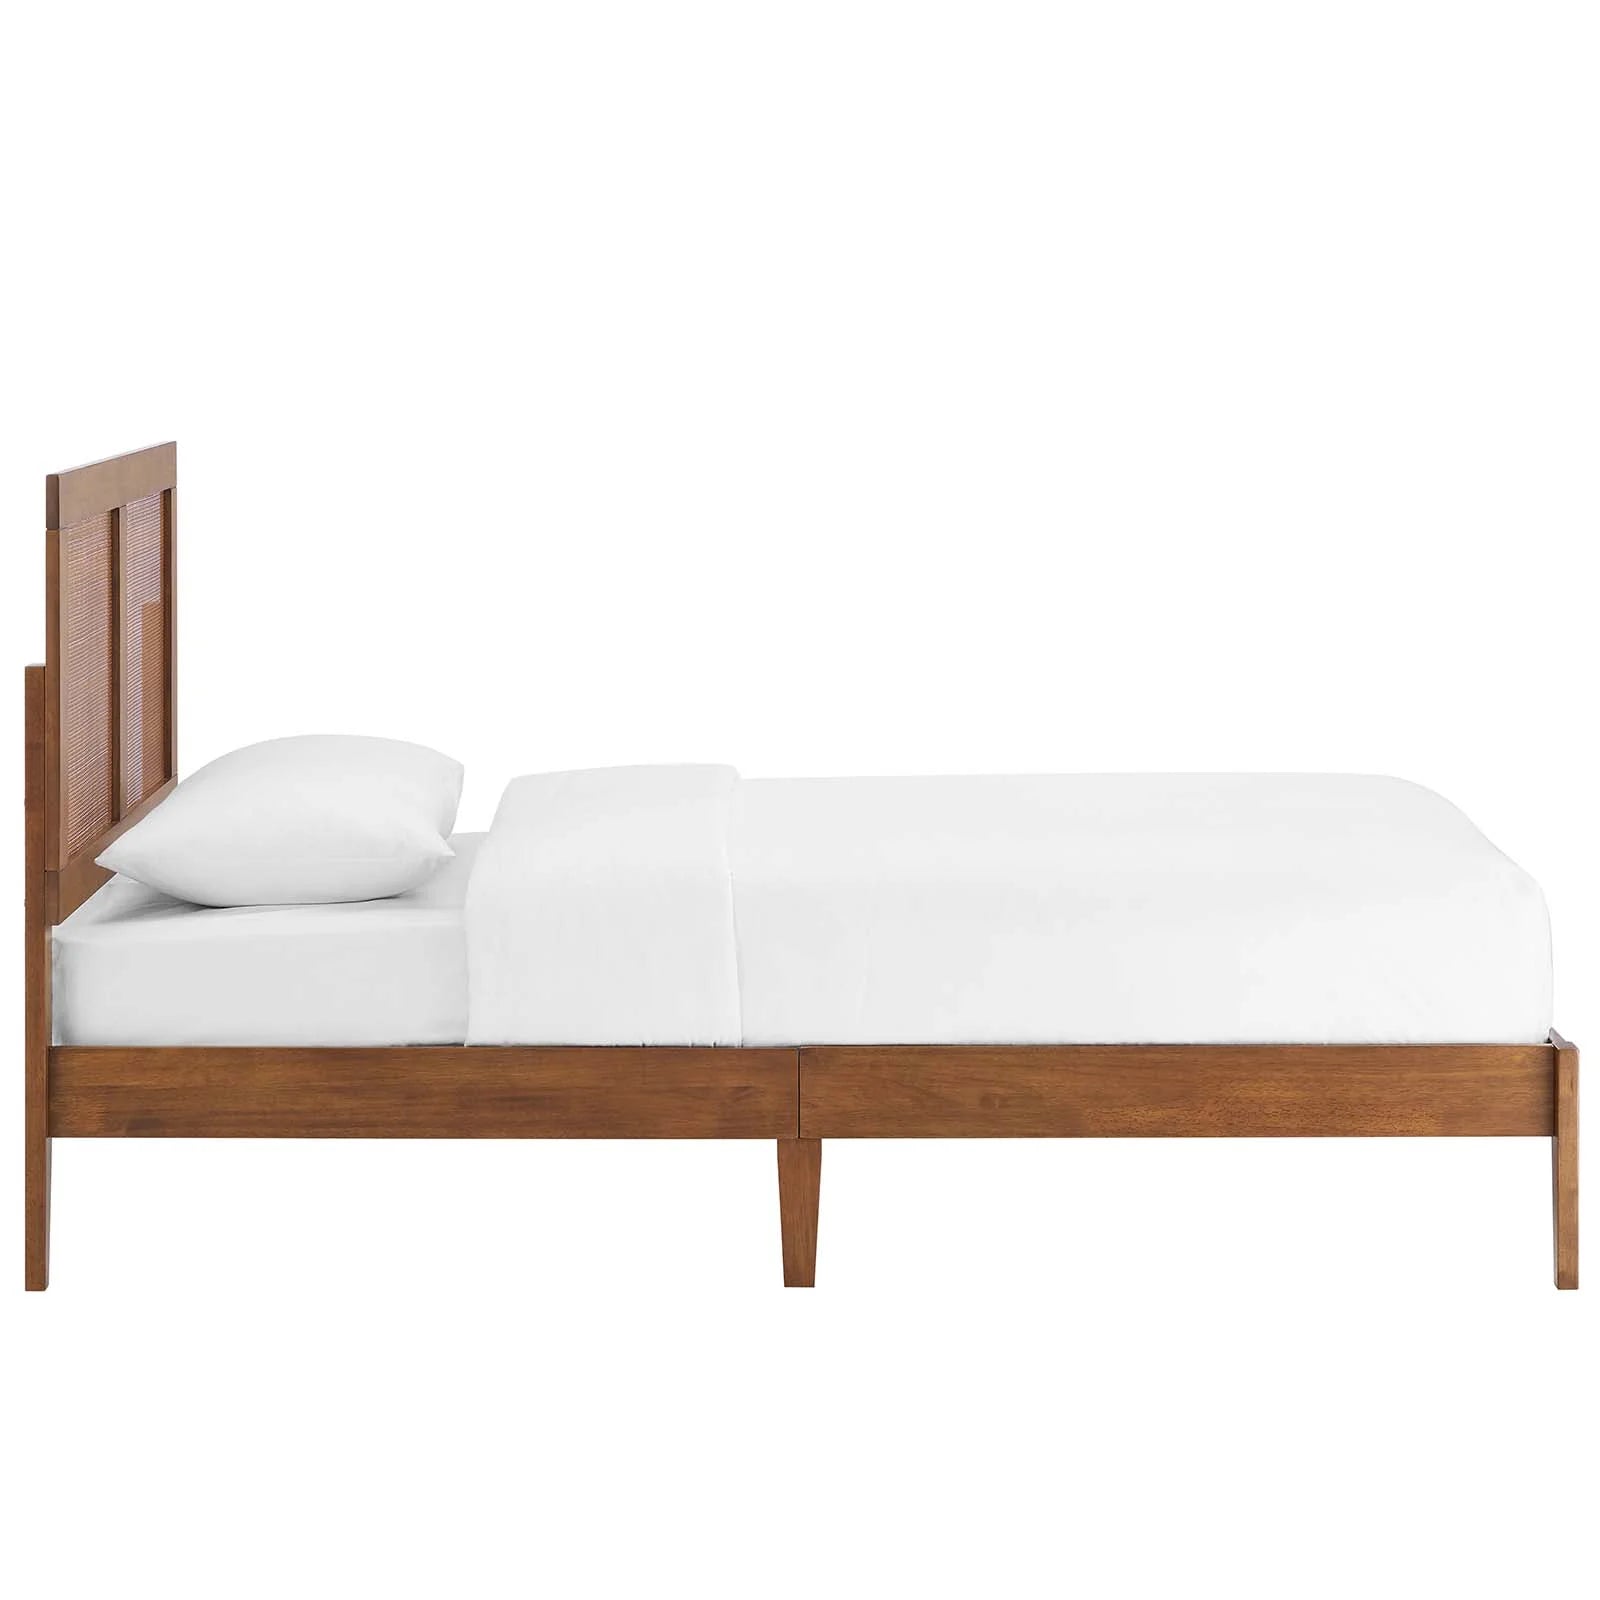 Sirocco Rattan and Wood Platform Bed - Elite Maison